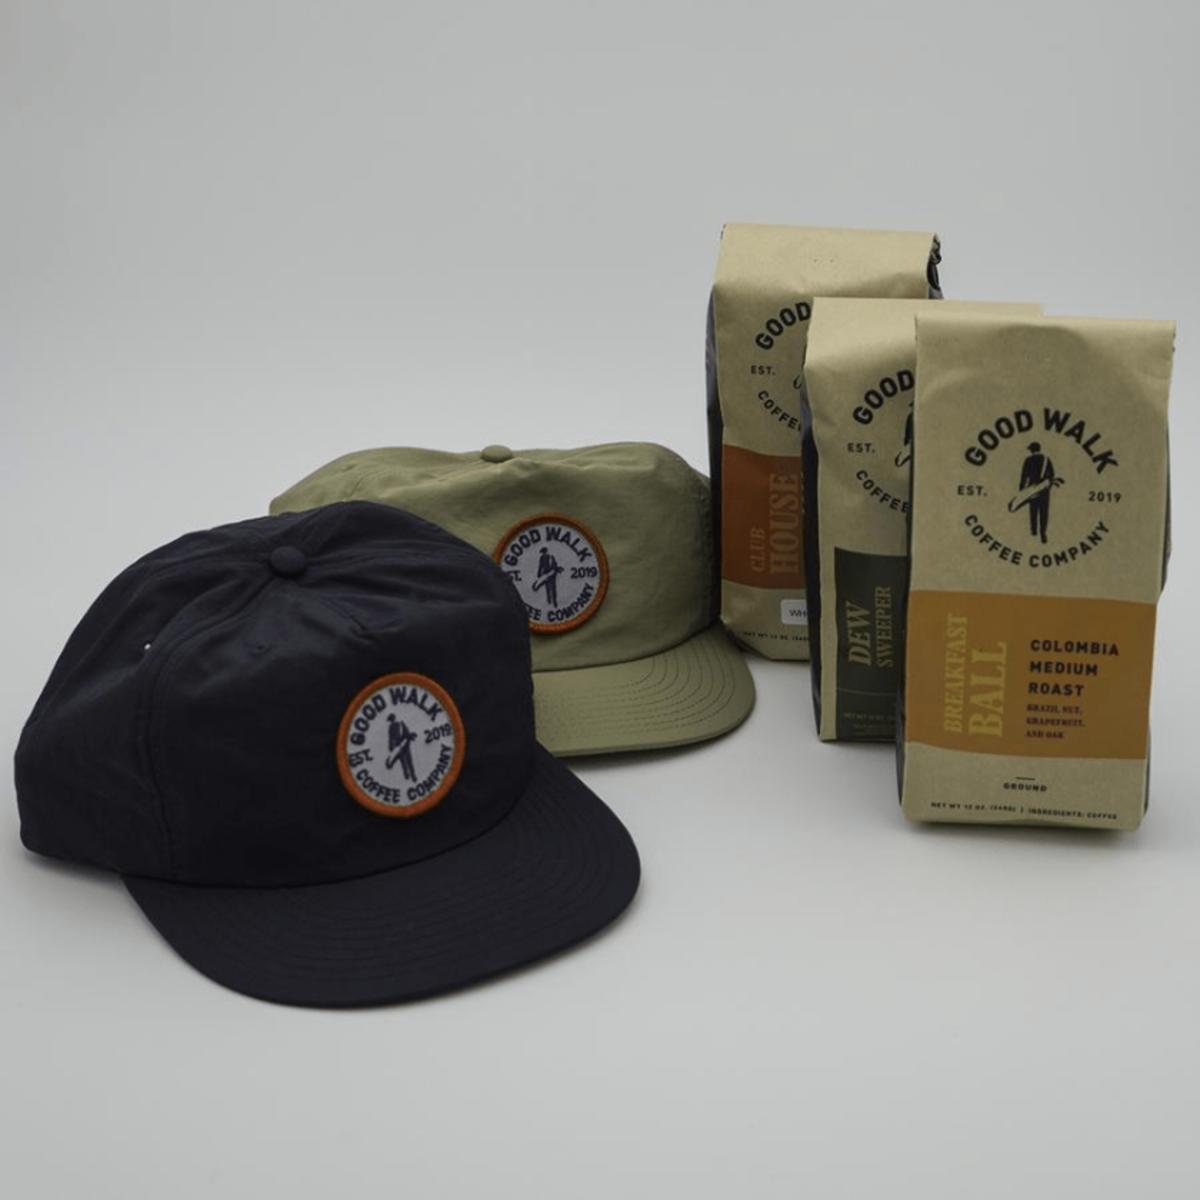 Good Walk Coffee Co. logo hats and coffee beans.